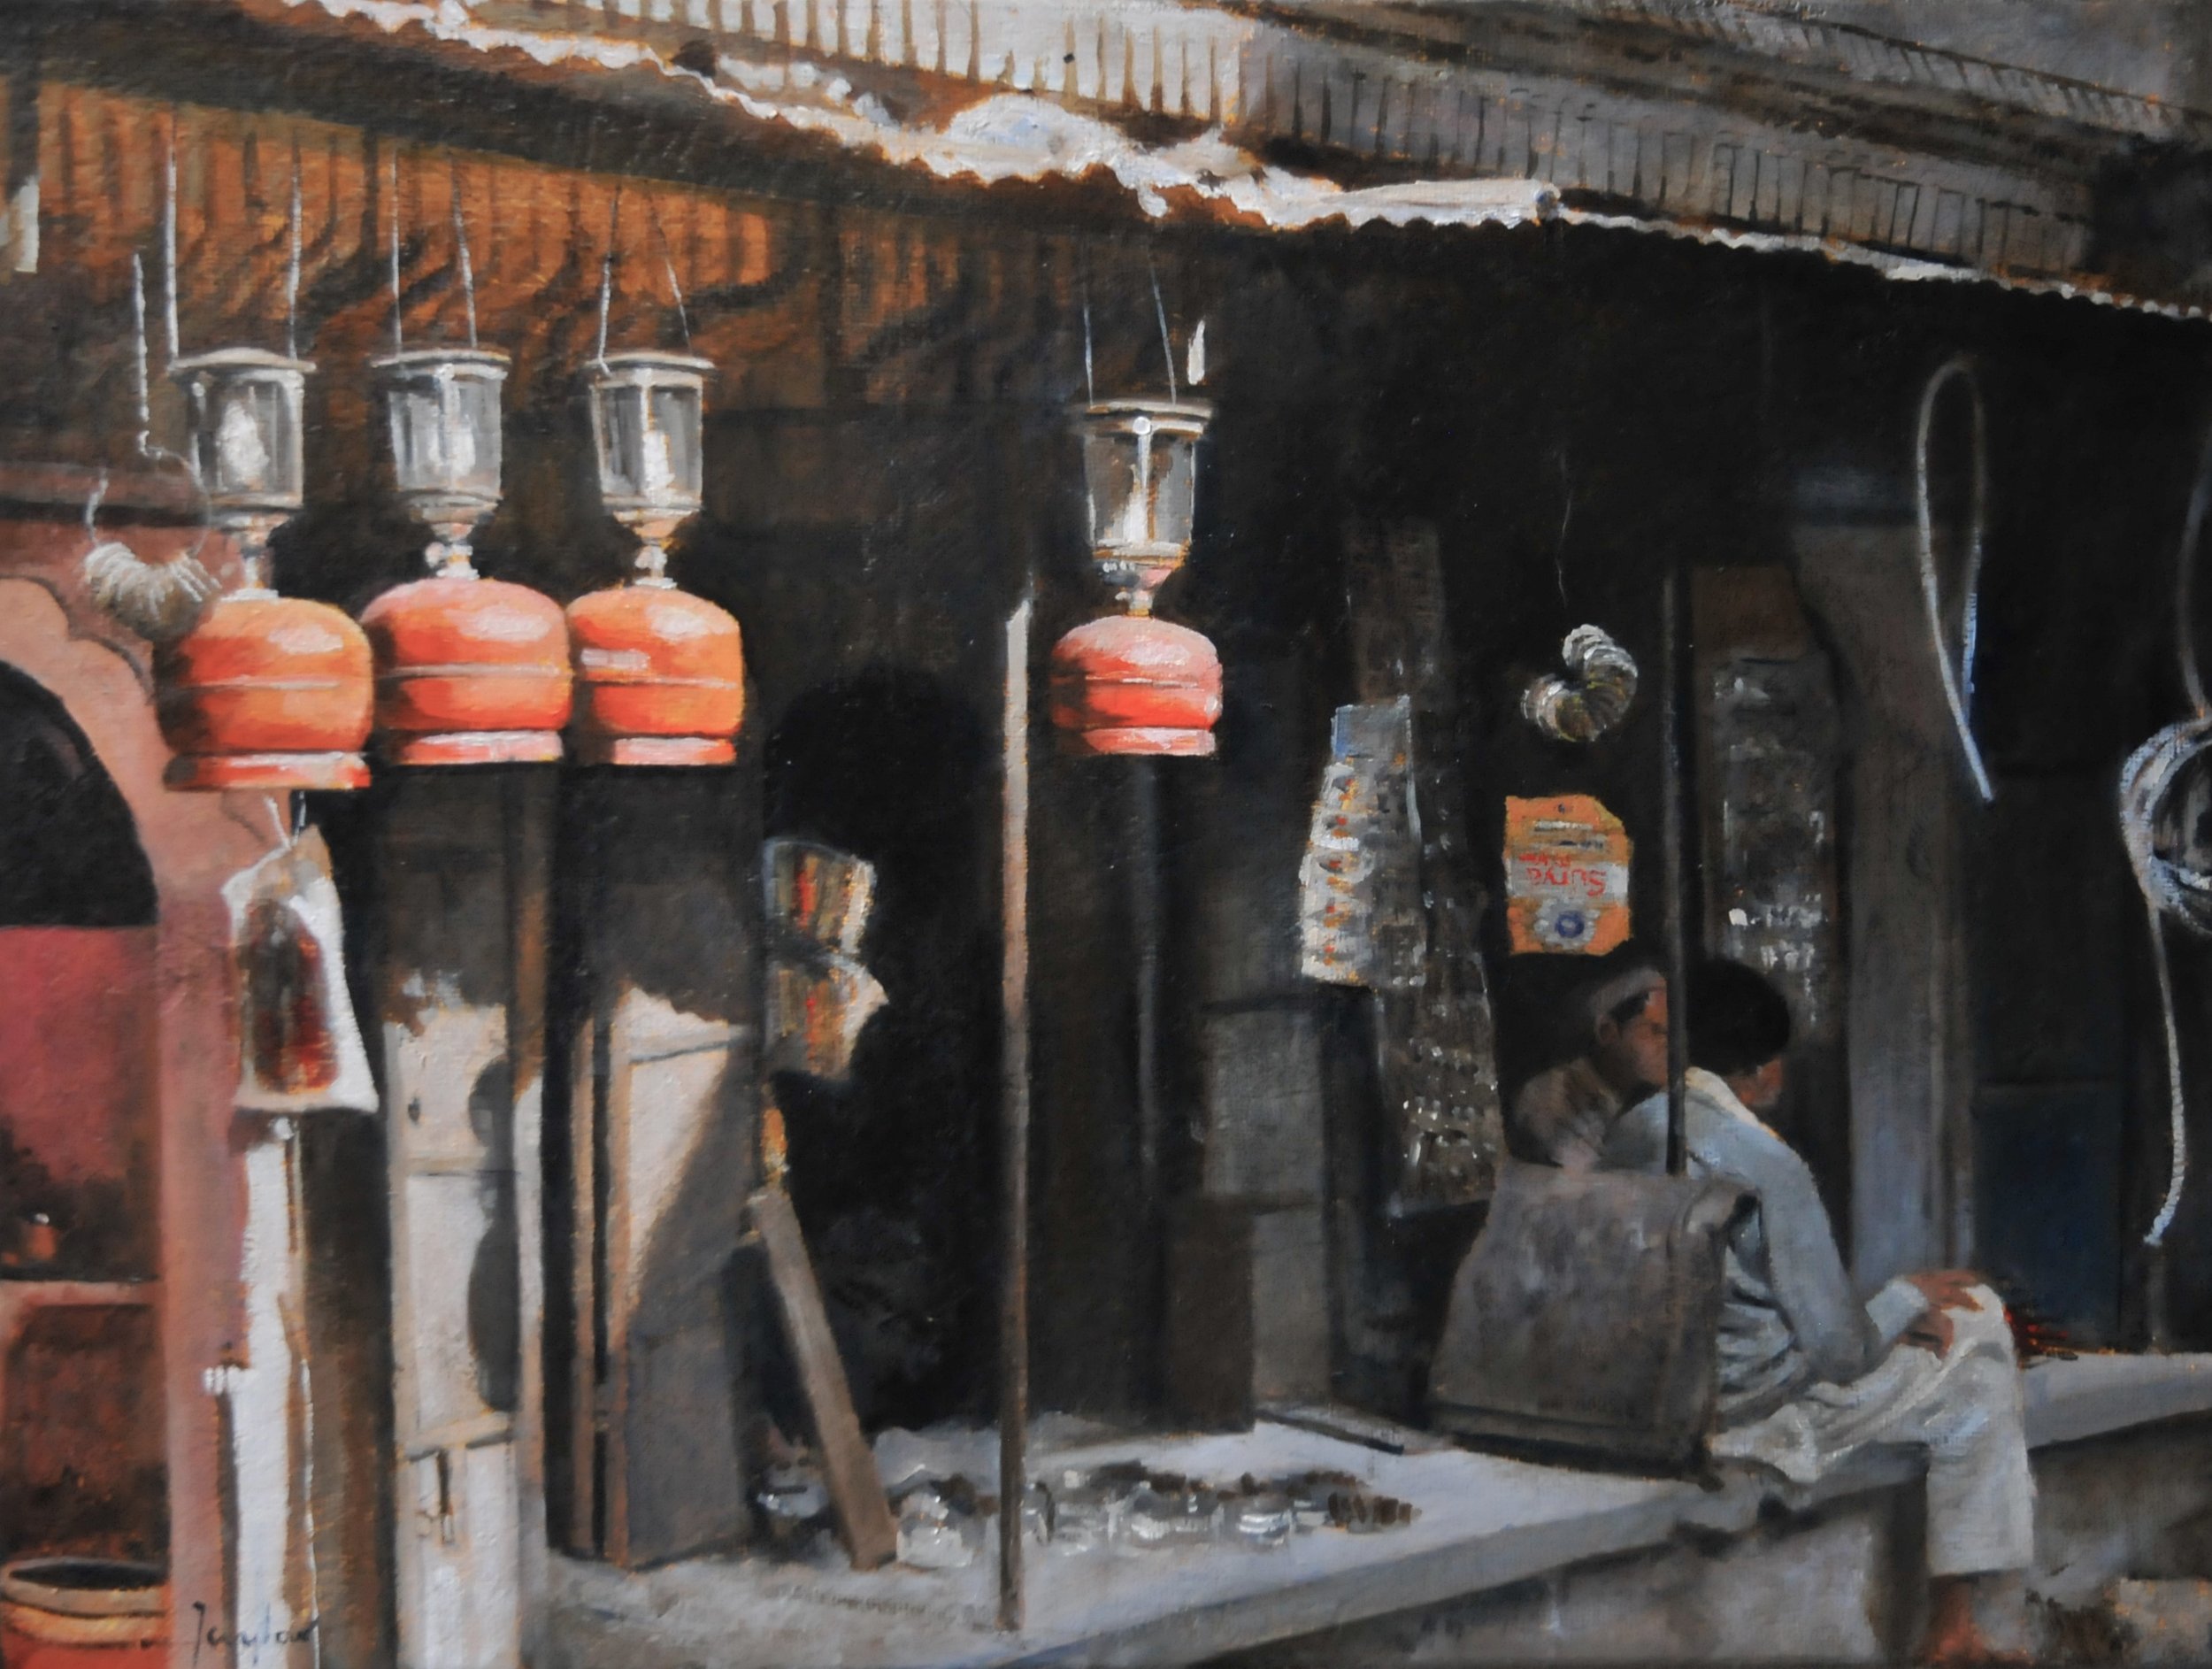 Hardware Shop  Jodhpur  Oil on canvas  40 x 30cms  Will Taylor.JPG